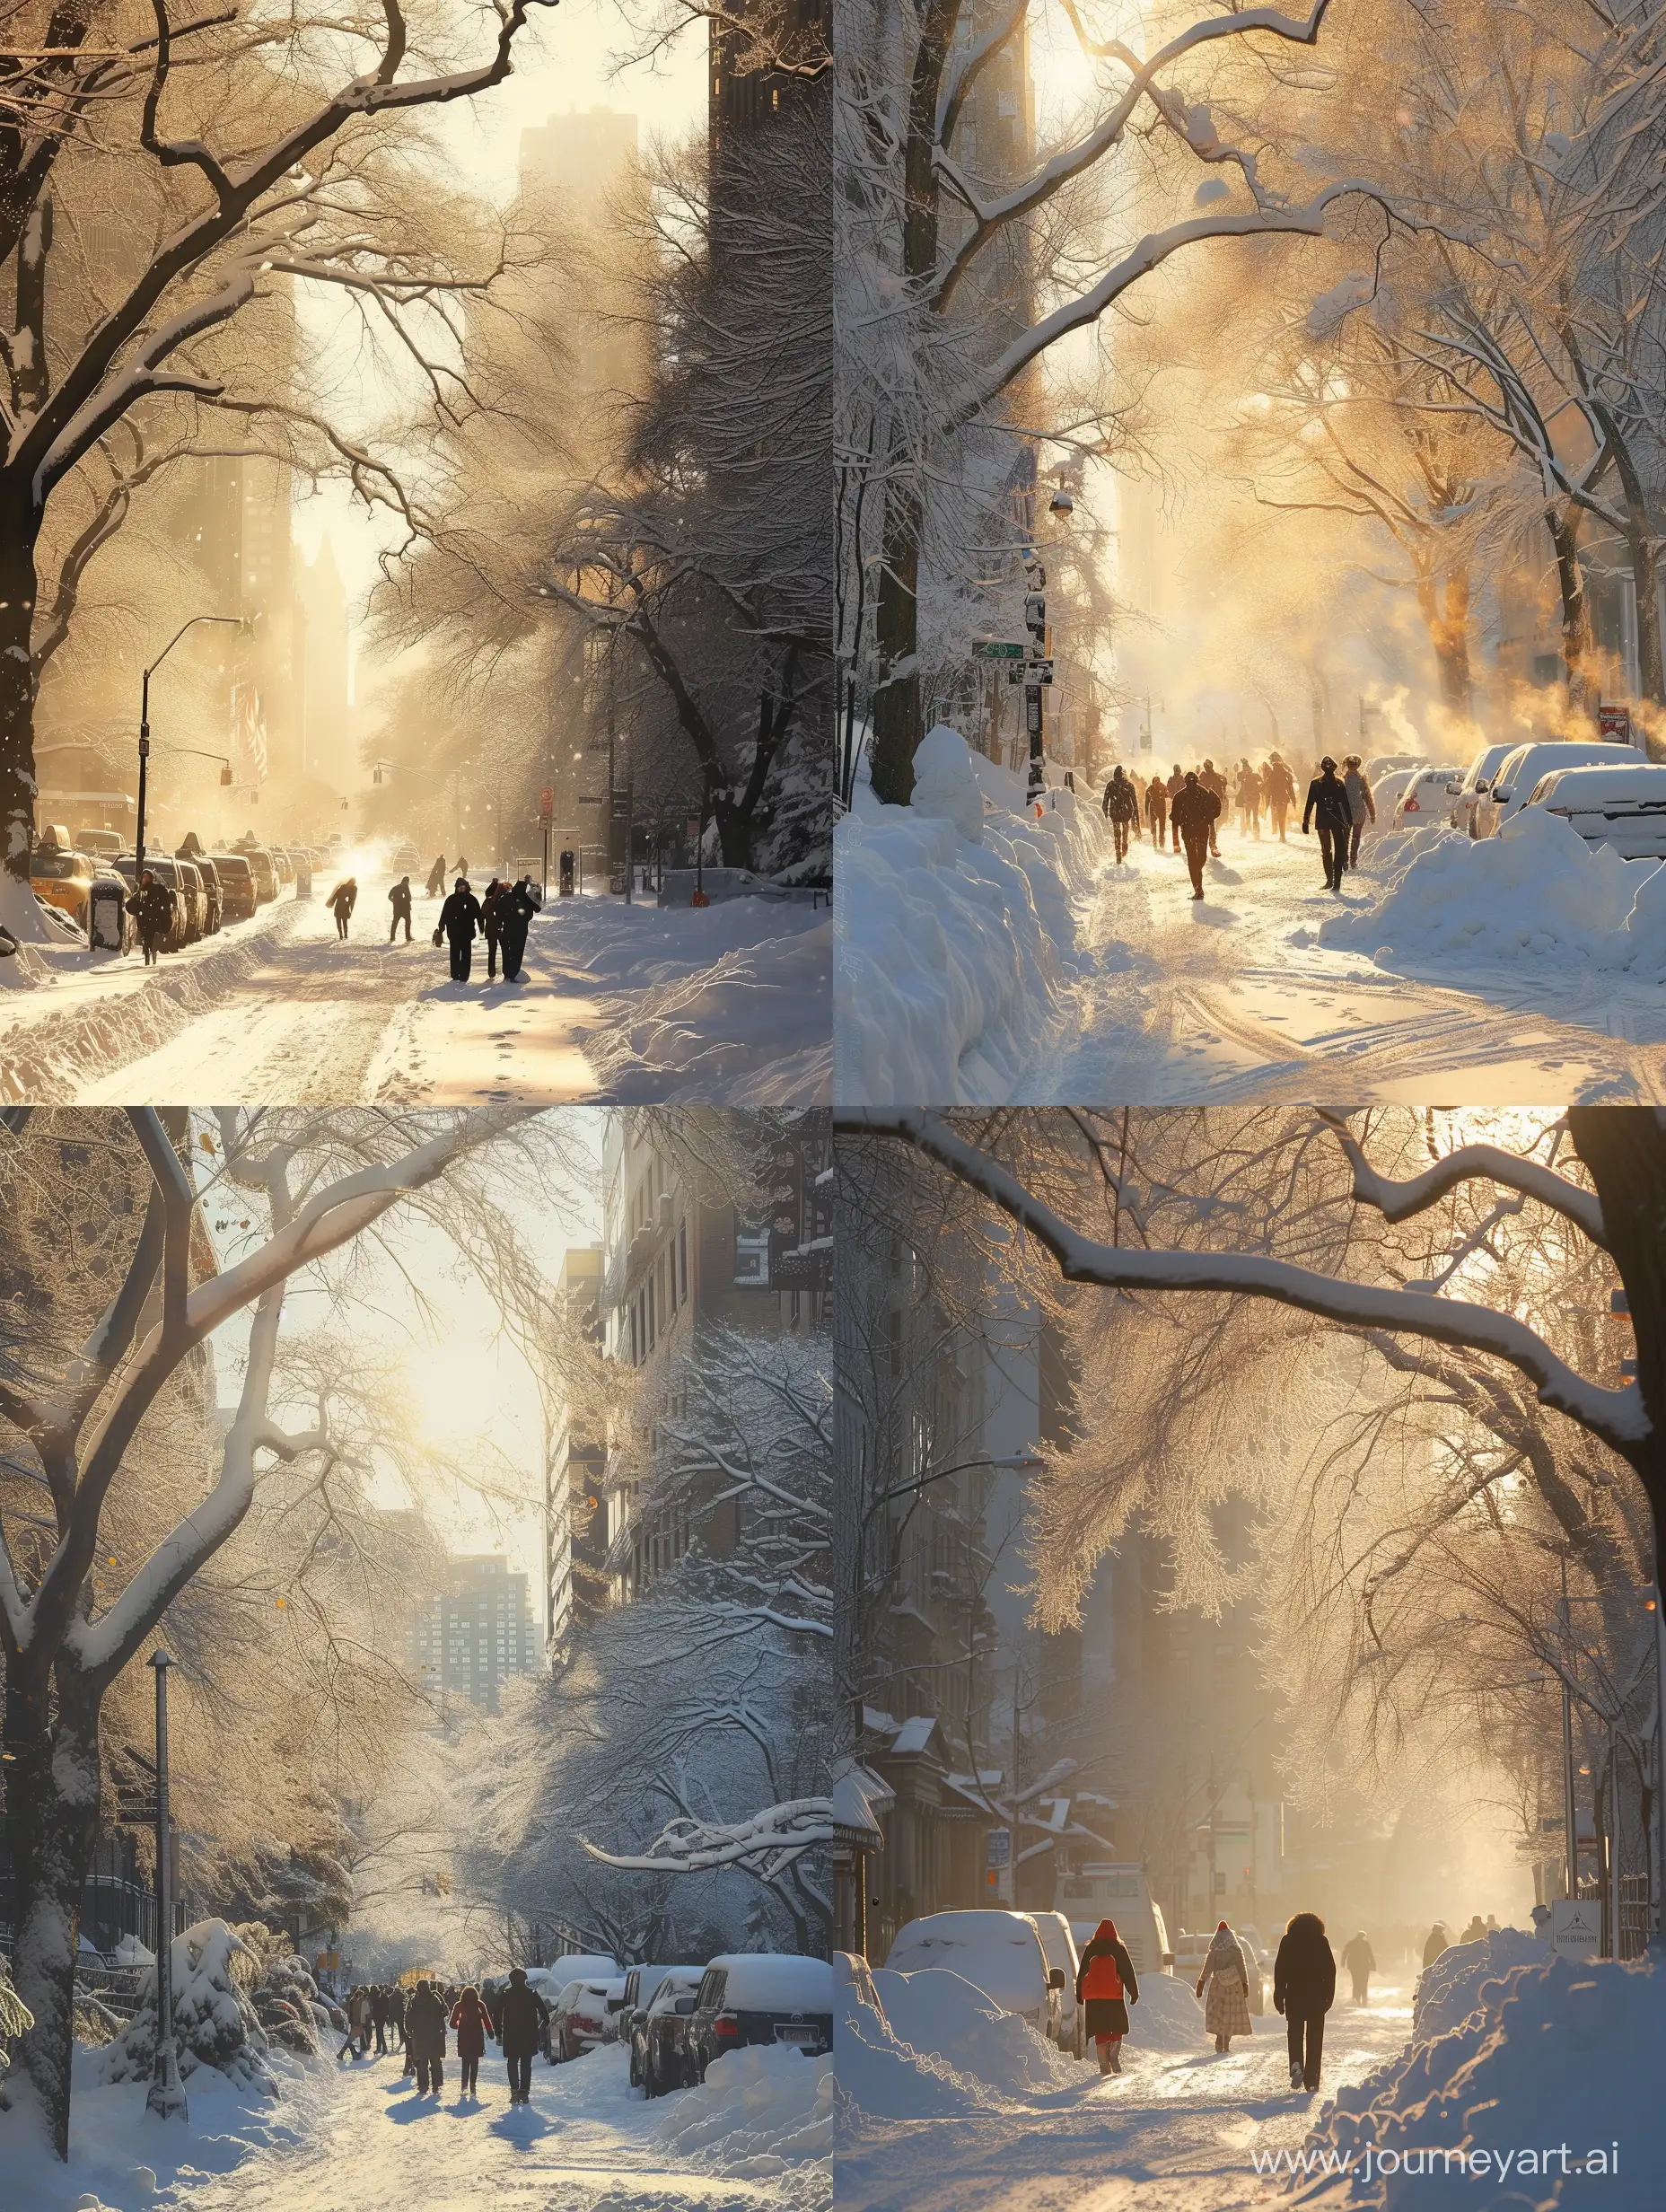 Winter-Wonderland-in-New-York-Realistic-Snowy-Scene-with-Beautiful-People